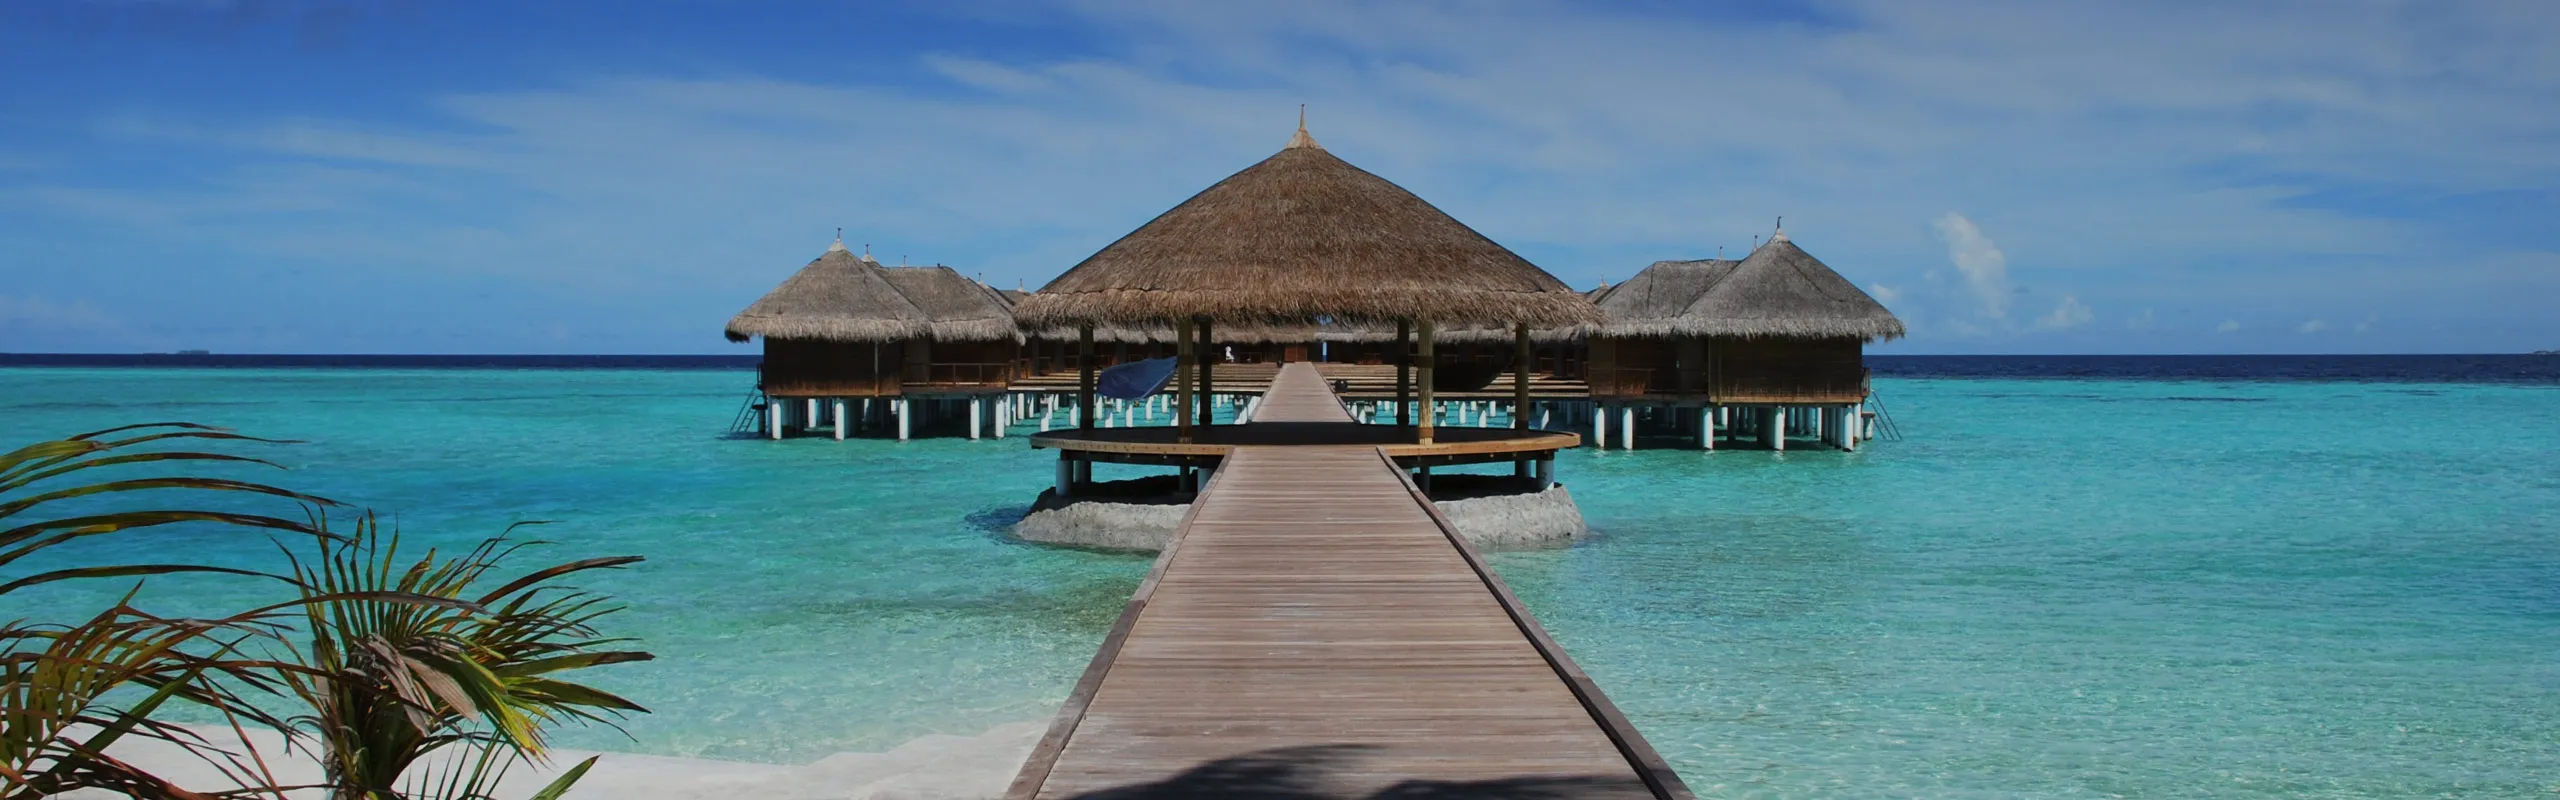 Ostrovný raj Maledivy